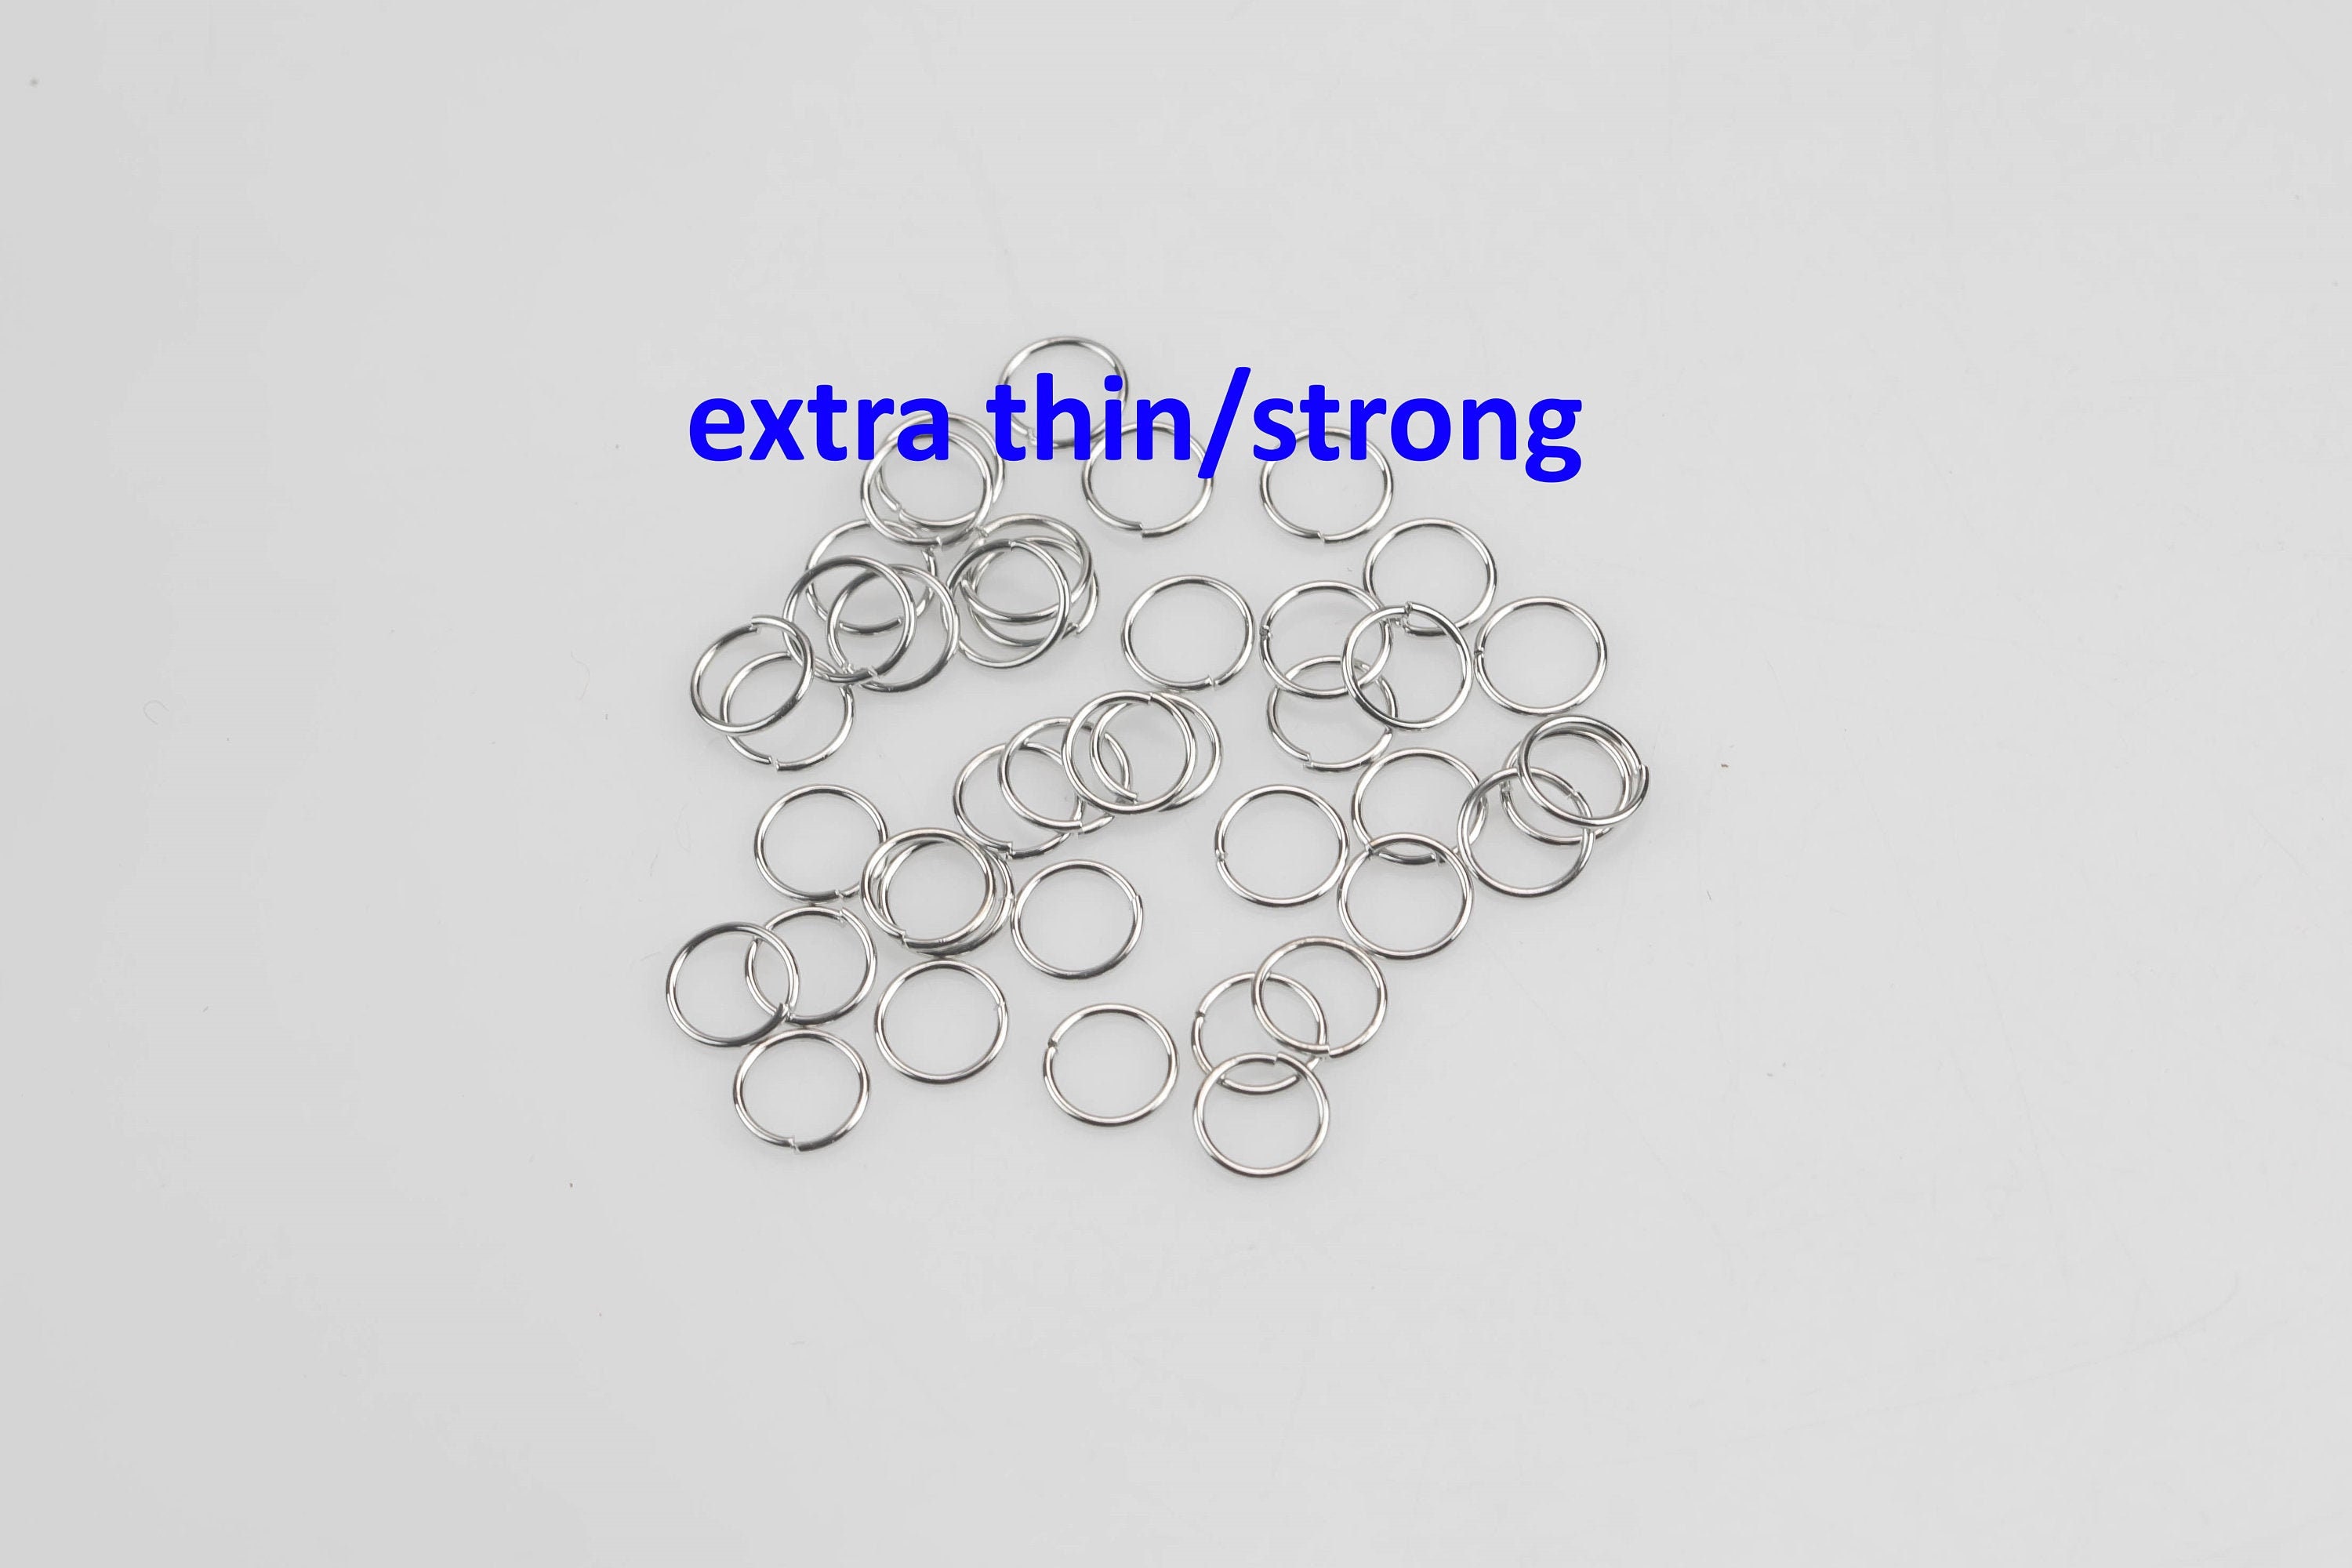 Sterling Silver 925 Open Jump Rings 0.6x2.5mm, 22 Gauge, 2.5mm Inside  Diameter